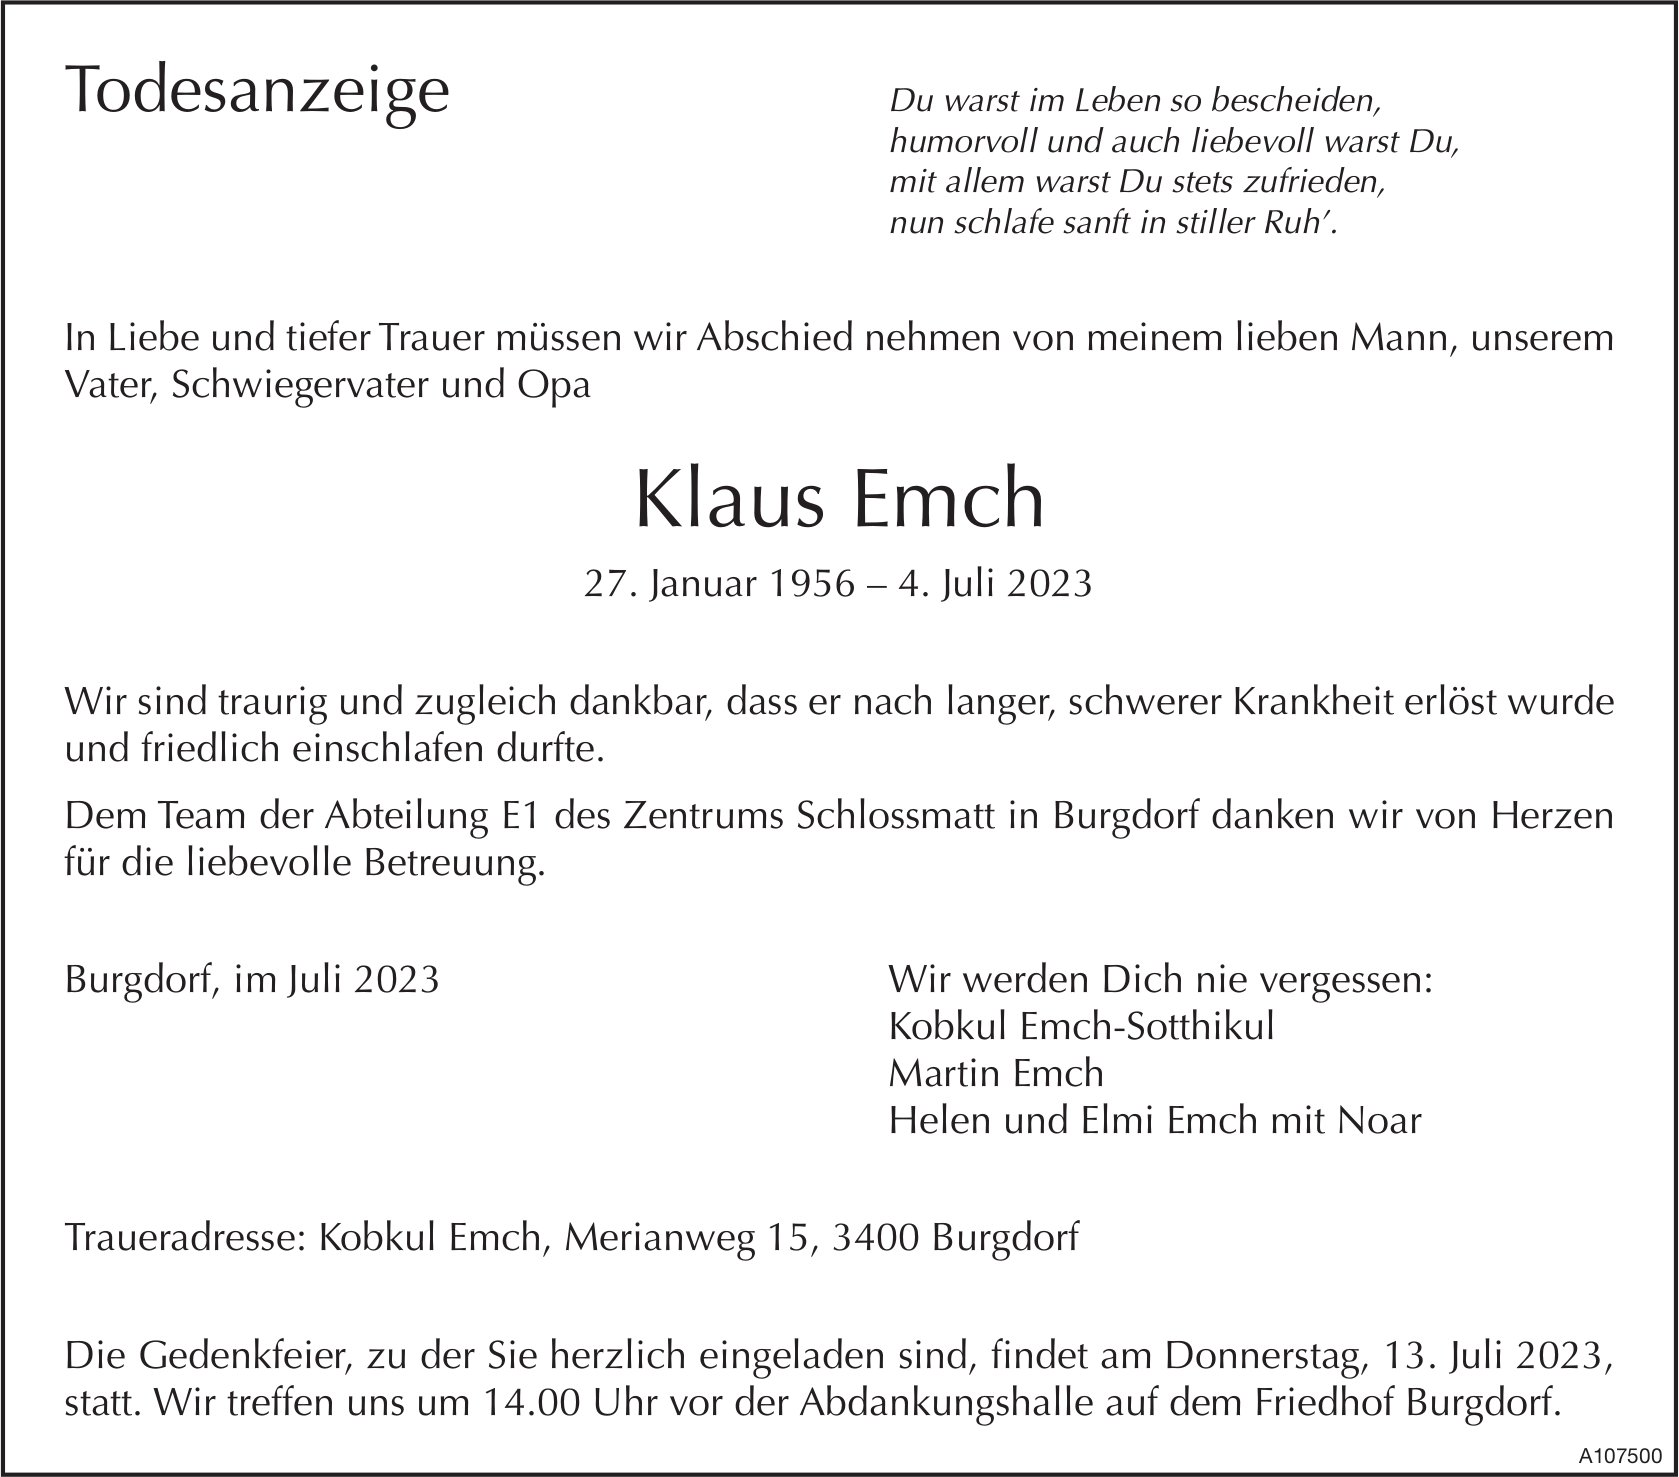 Klaus Emch, Juli 2023 / TA